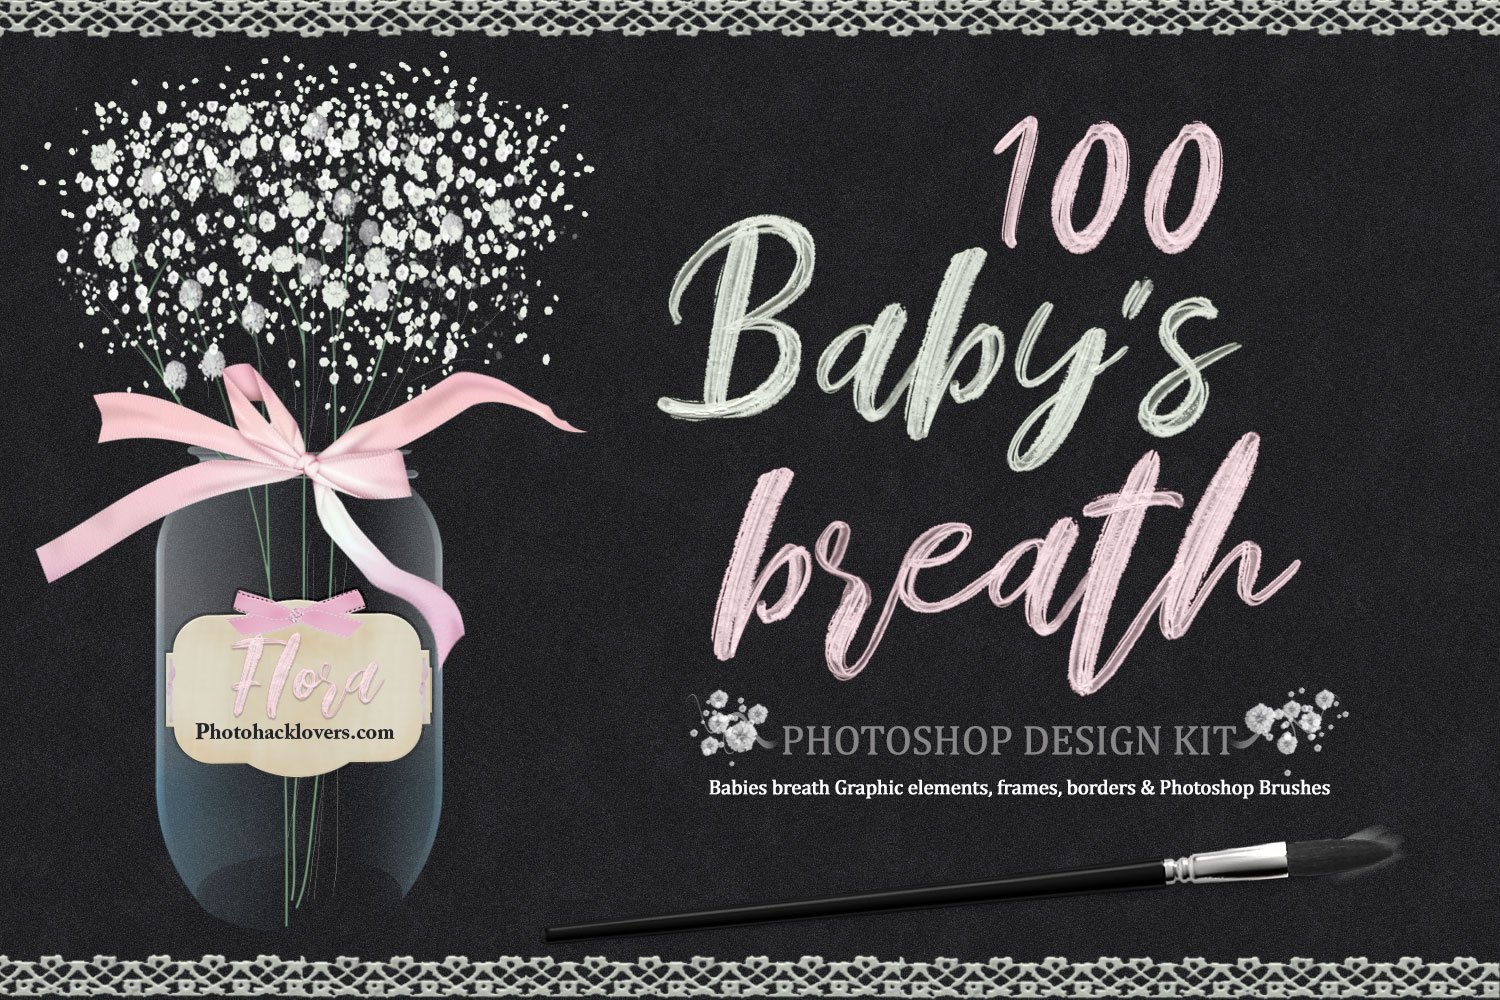 100 Babys Breath Design Kitcover image.